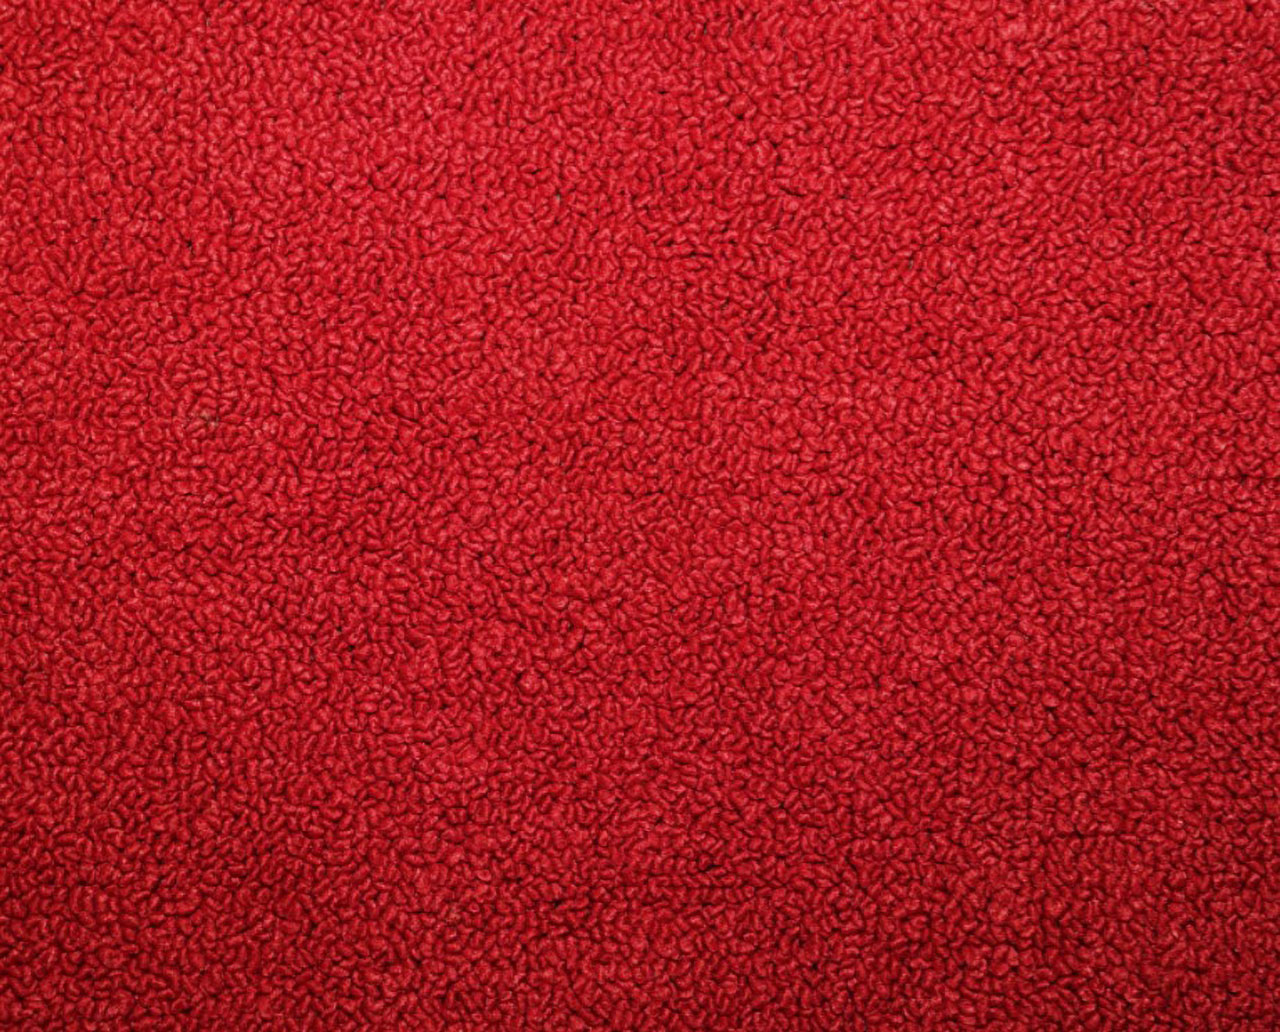 Holden Kingswood HG Kingswood Panel Van 12E Baroque Red Carpet (Image 1 of 1)